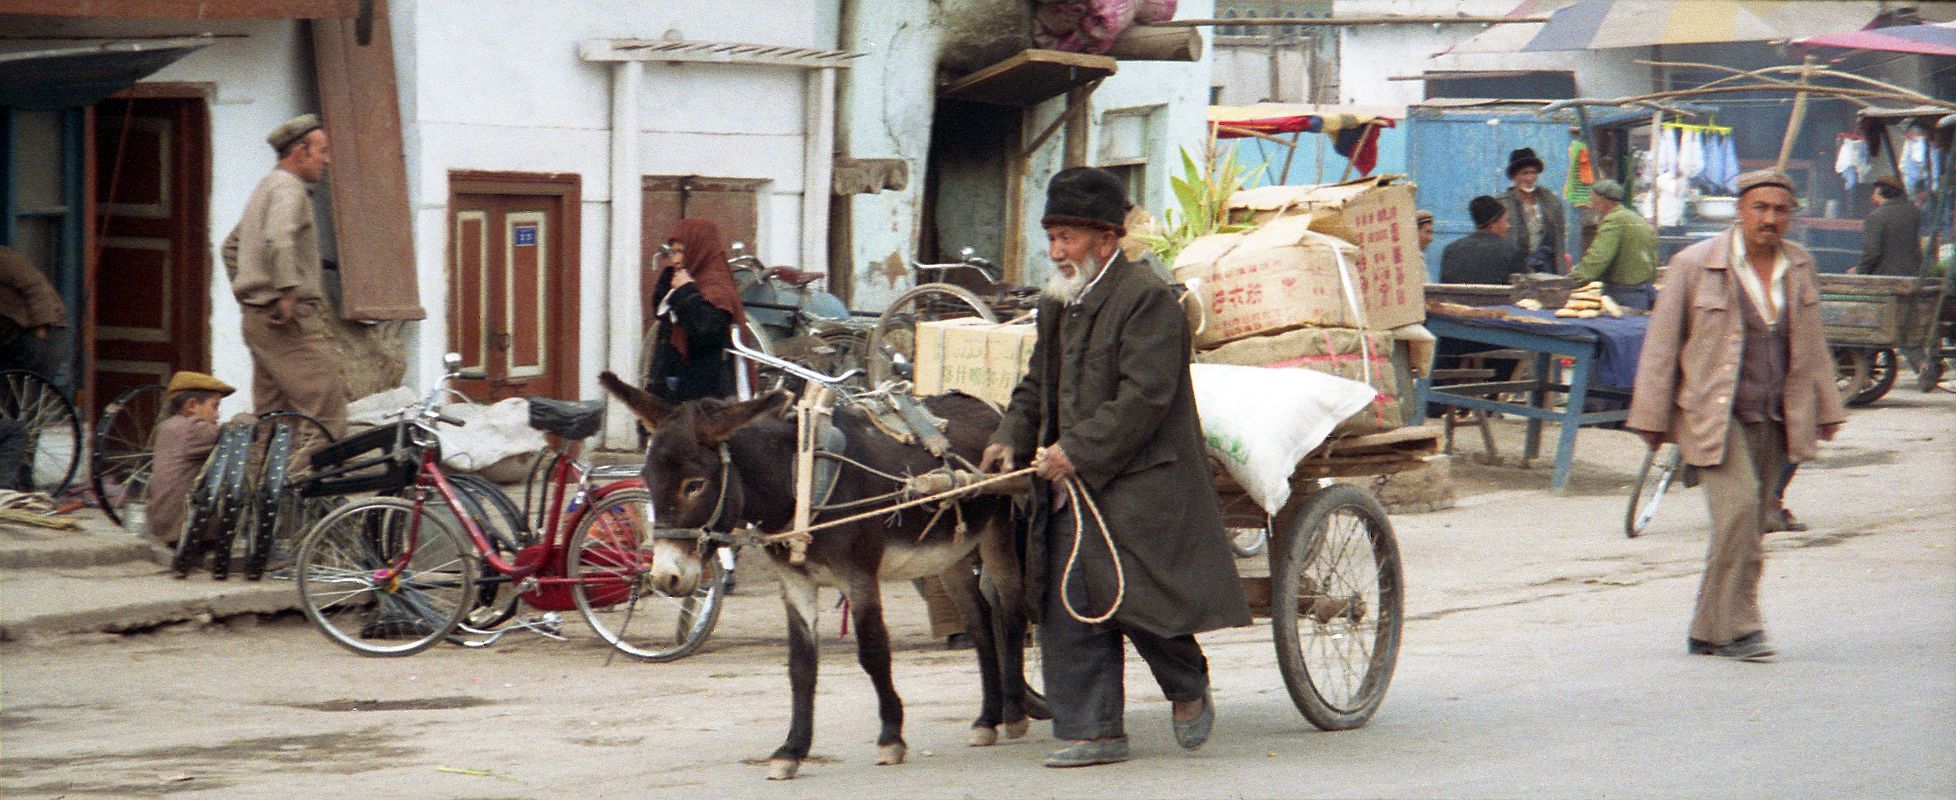 10 Kashgar Old City Street Scene 1993 Old Man With Donkey Cart